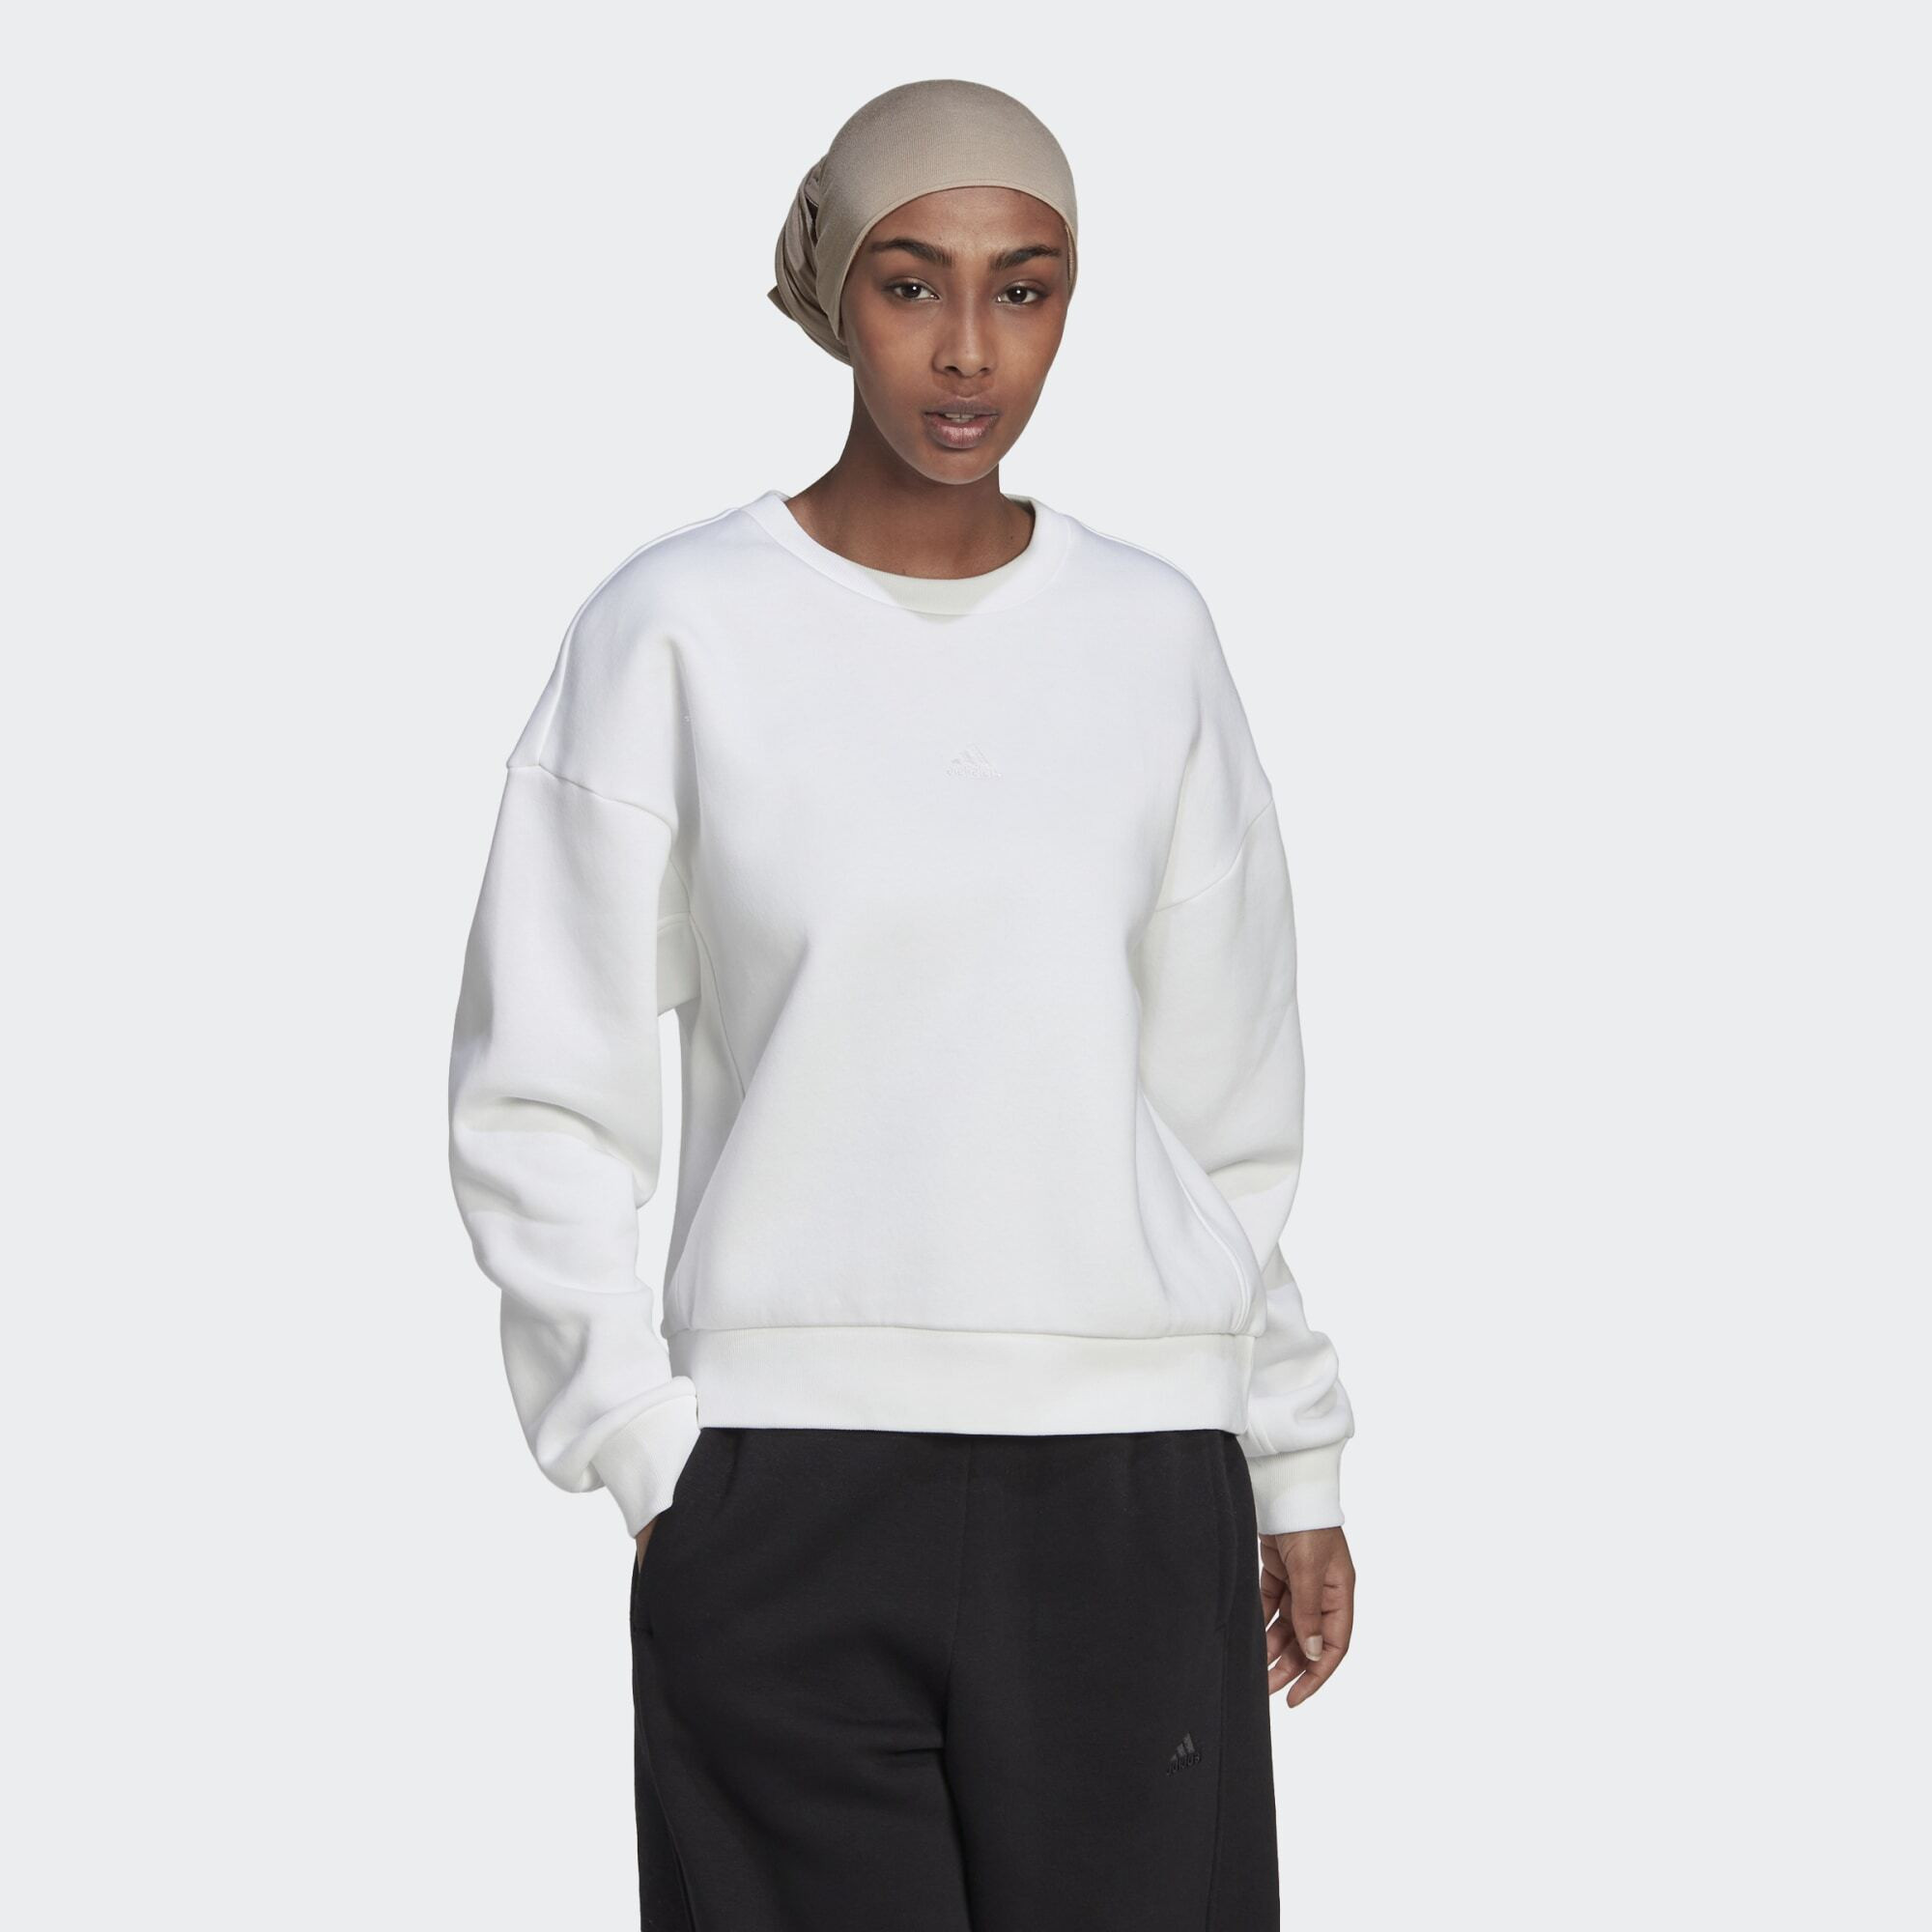 adidas All Szn Fleece Sweatshirt (9000122125_1539)